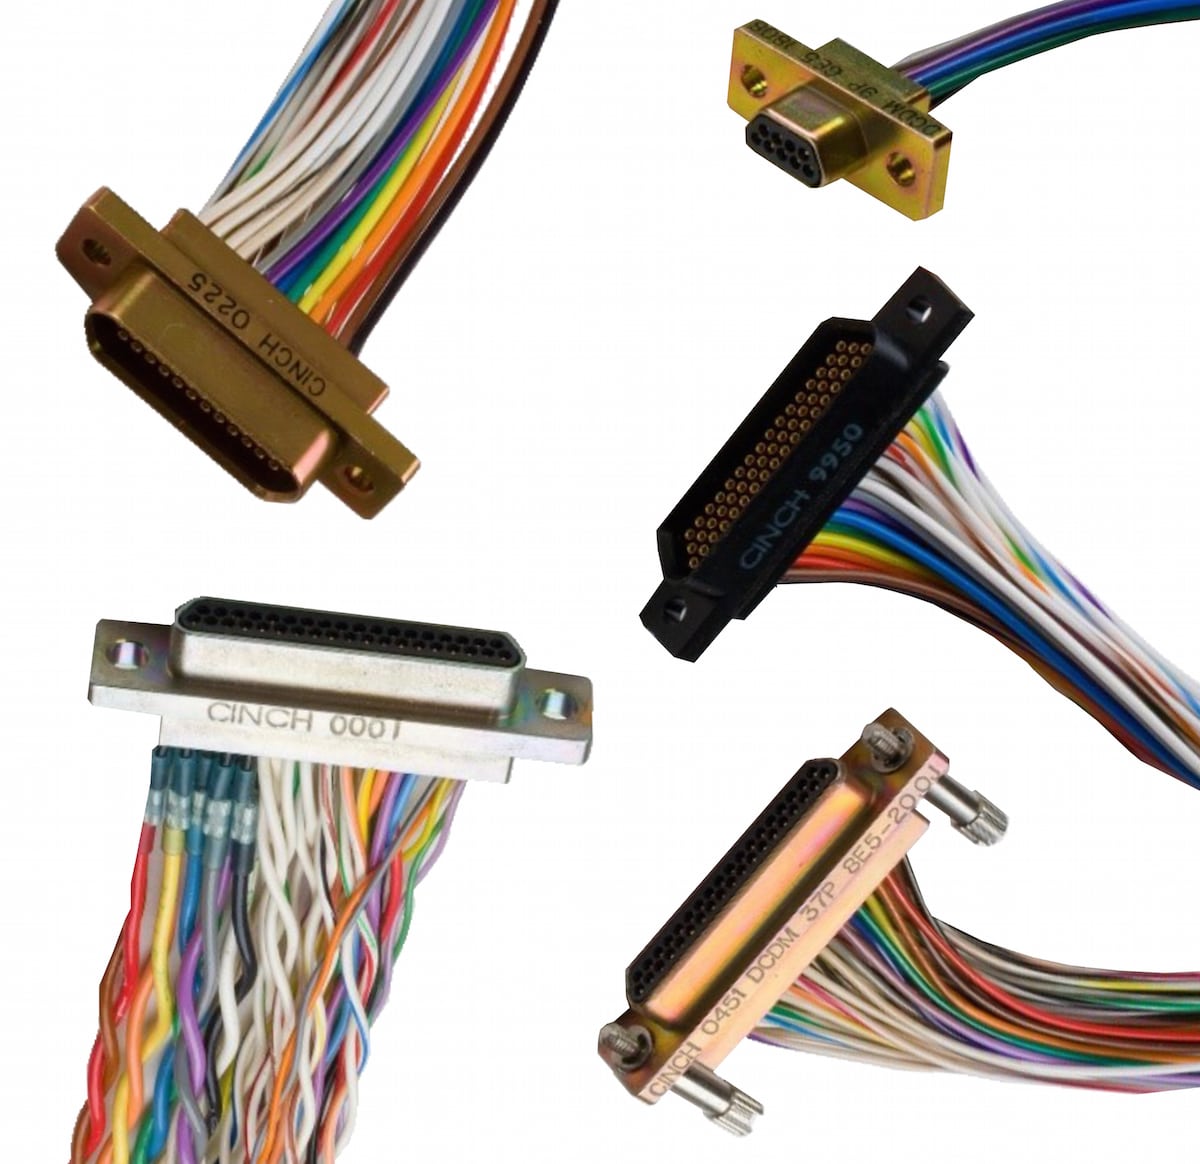 Cinch Connectivity Solutions’ Dura-ConTM D-shaped microminiature rectangular connectors